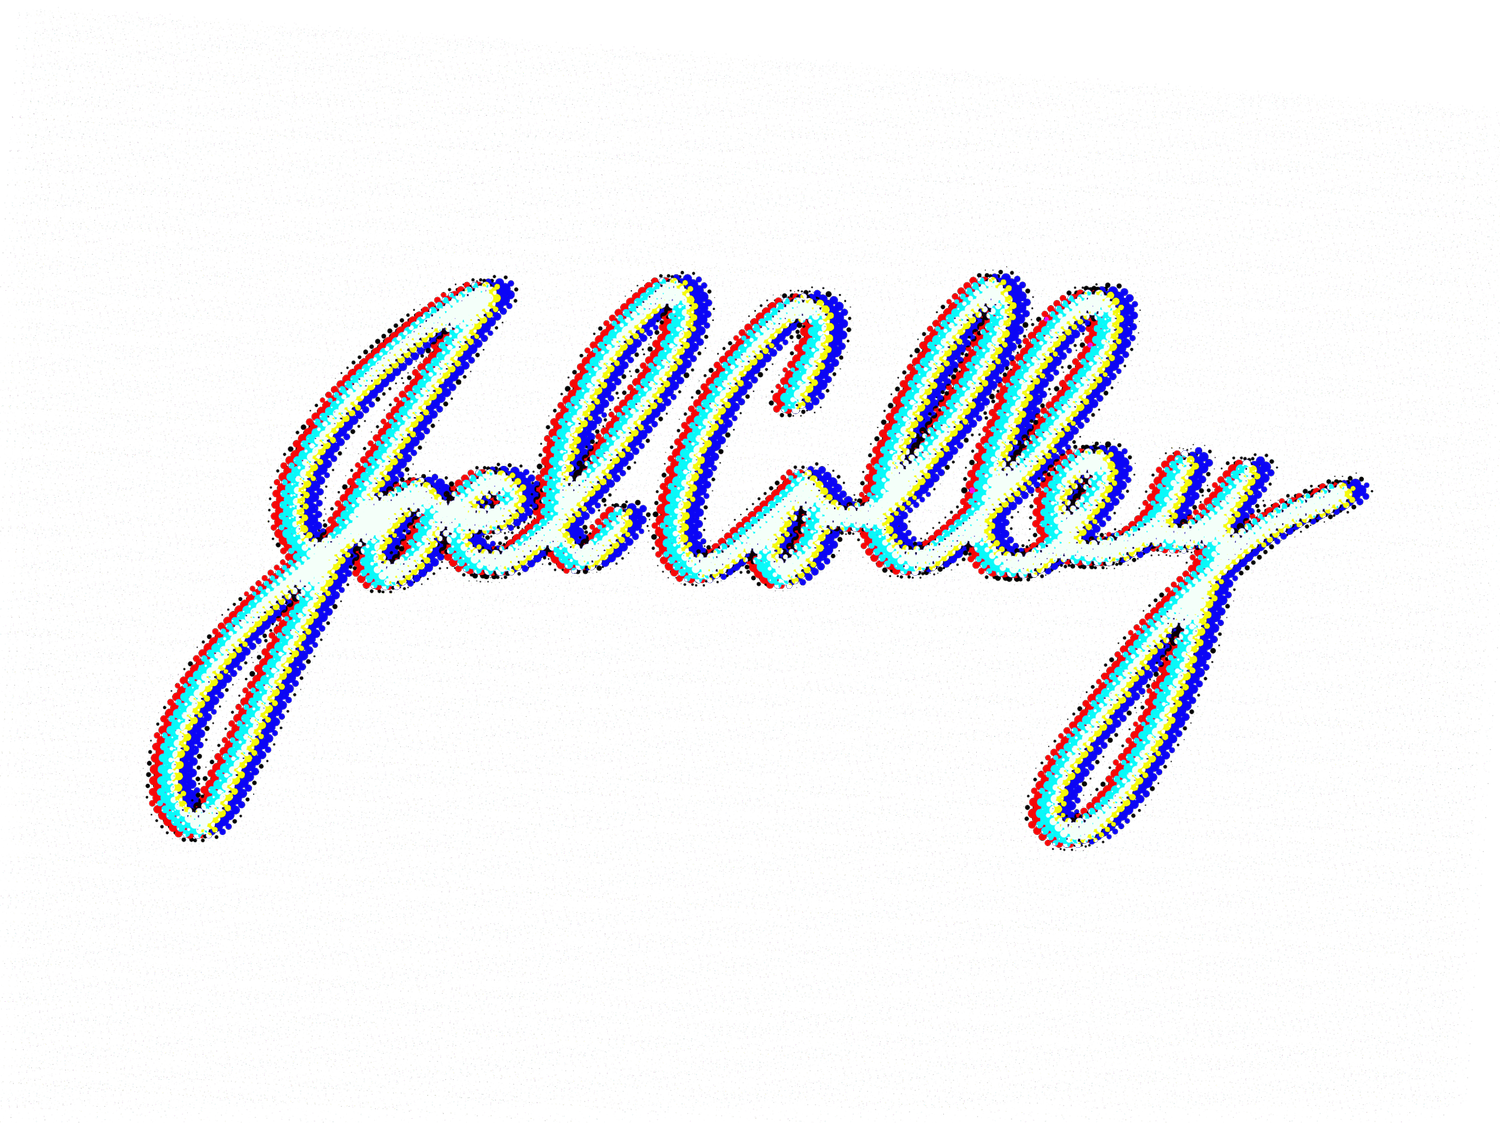 Joel Colley